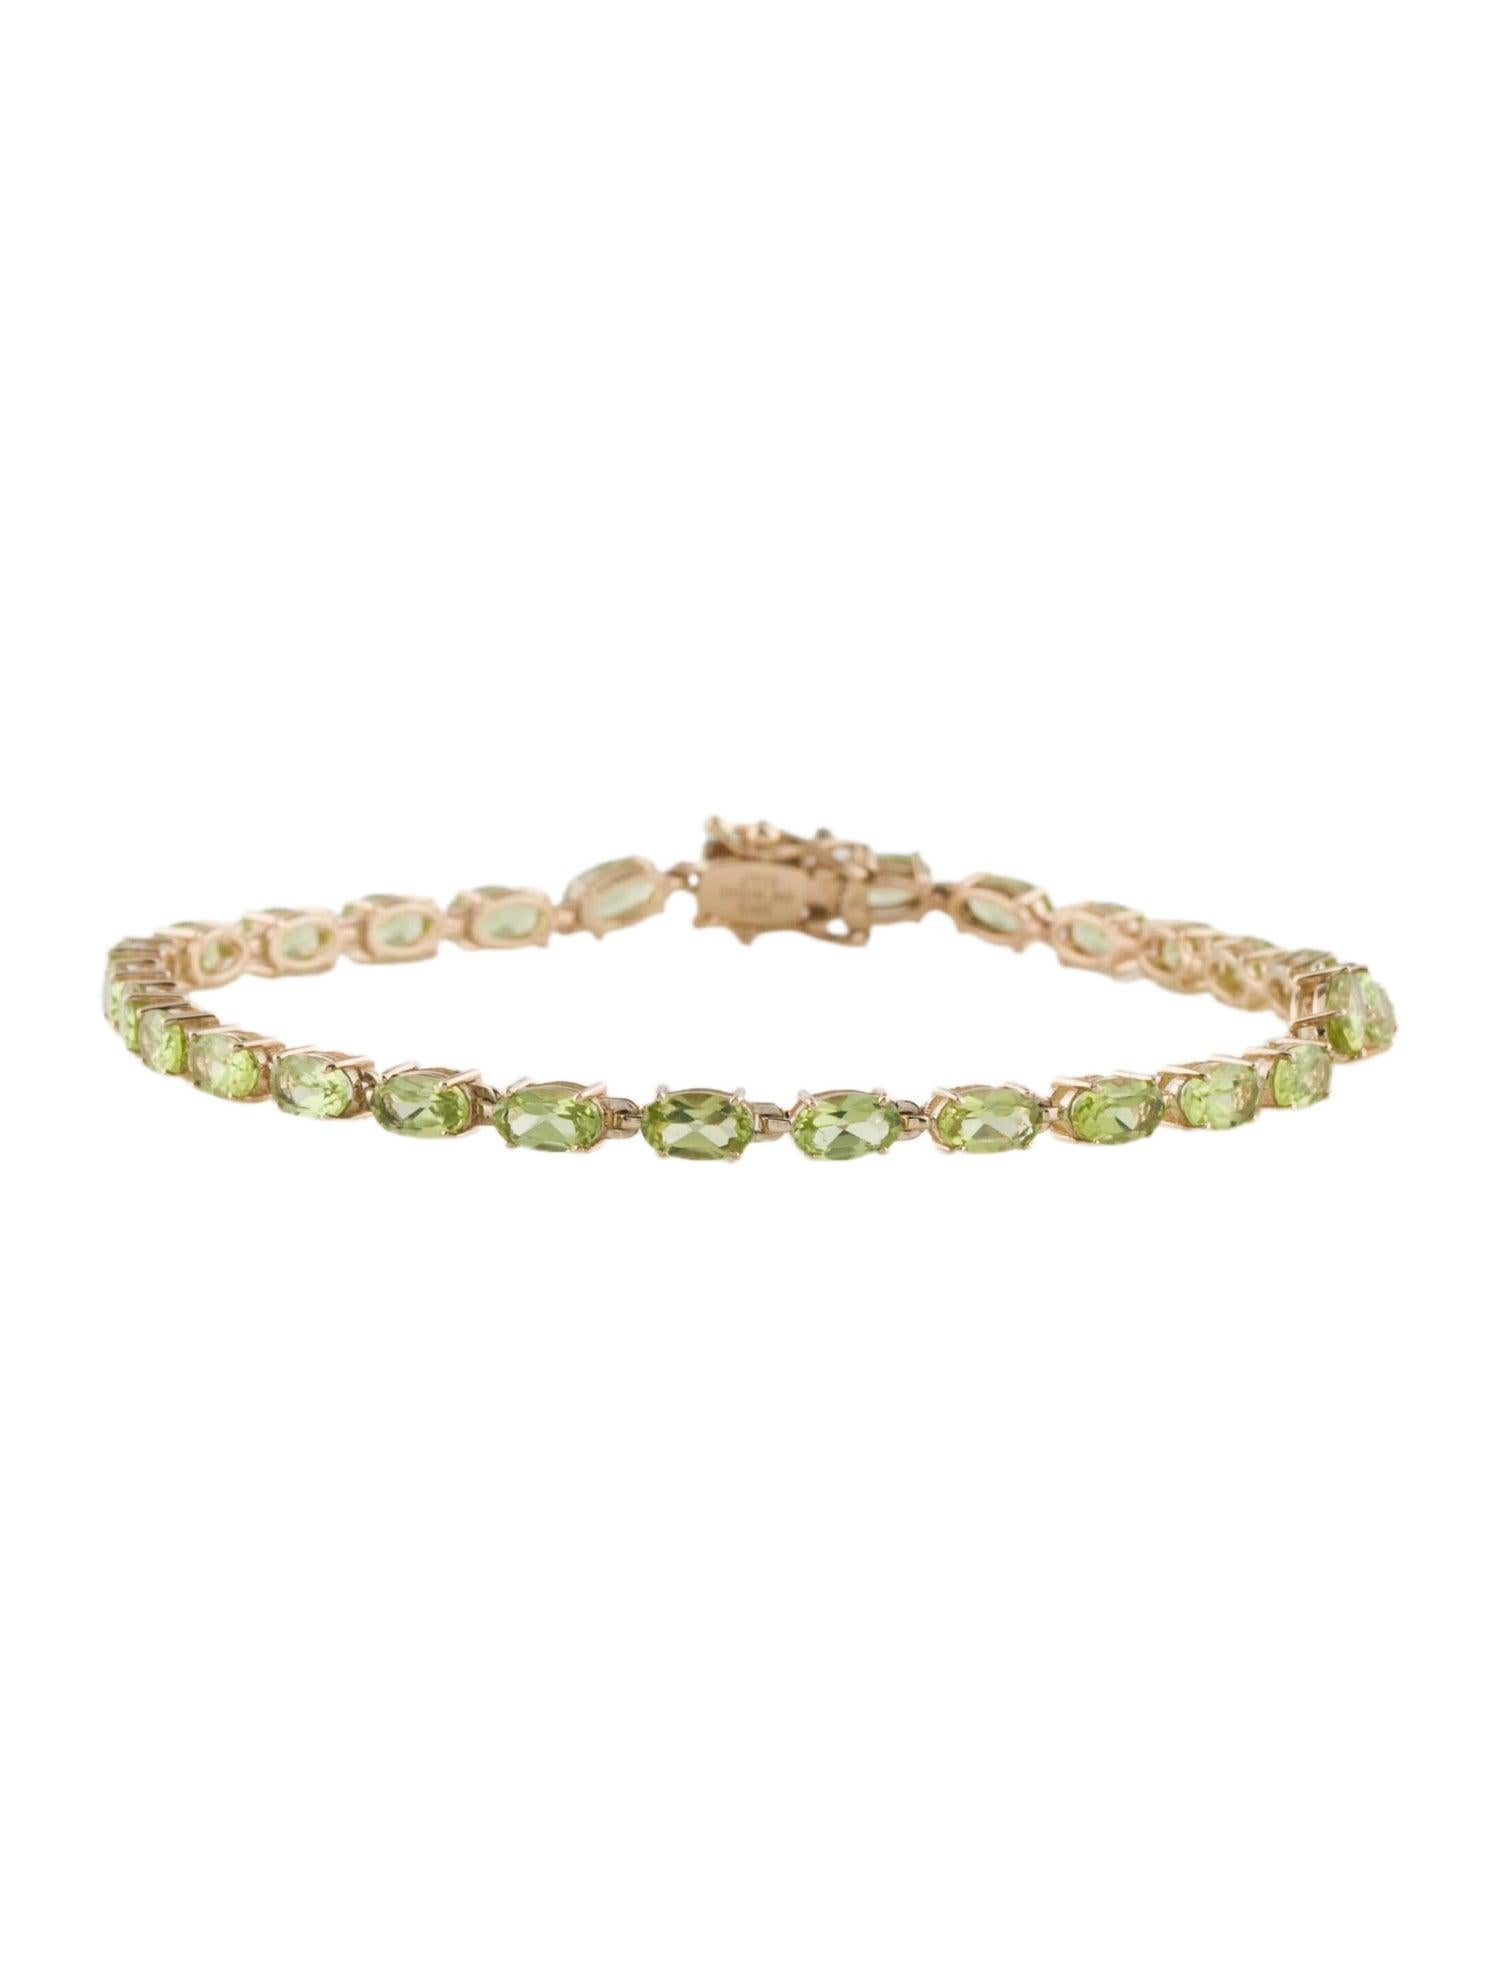 14K Peridot Link Bracelet - Vibrant Gemstone Elegance, Timeless Luxury Design In New Condition For Sale In Holtsville, NY